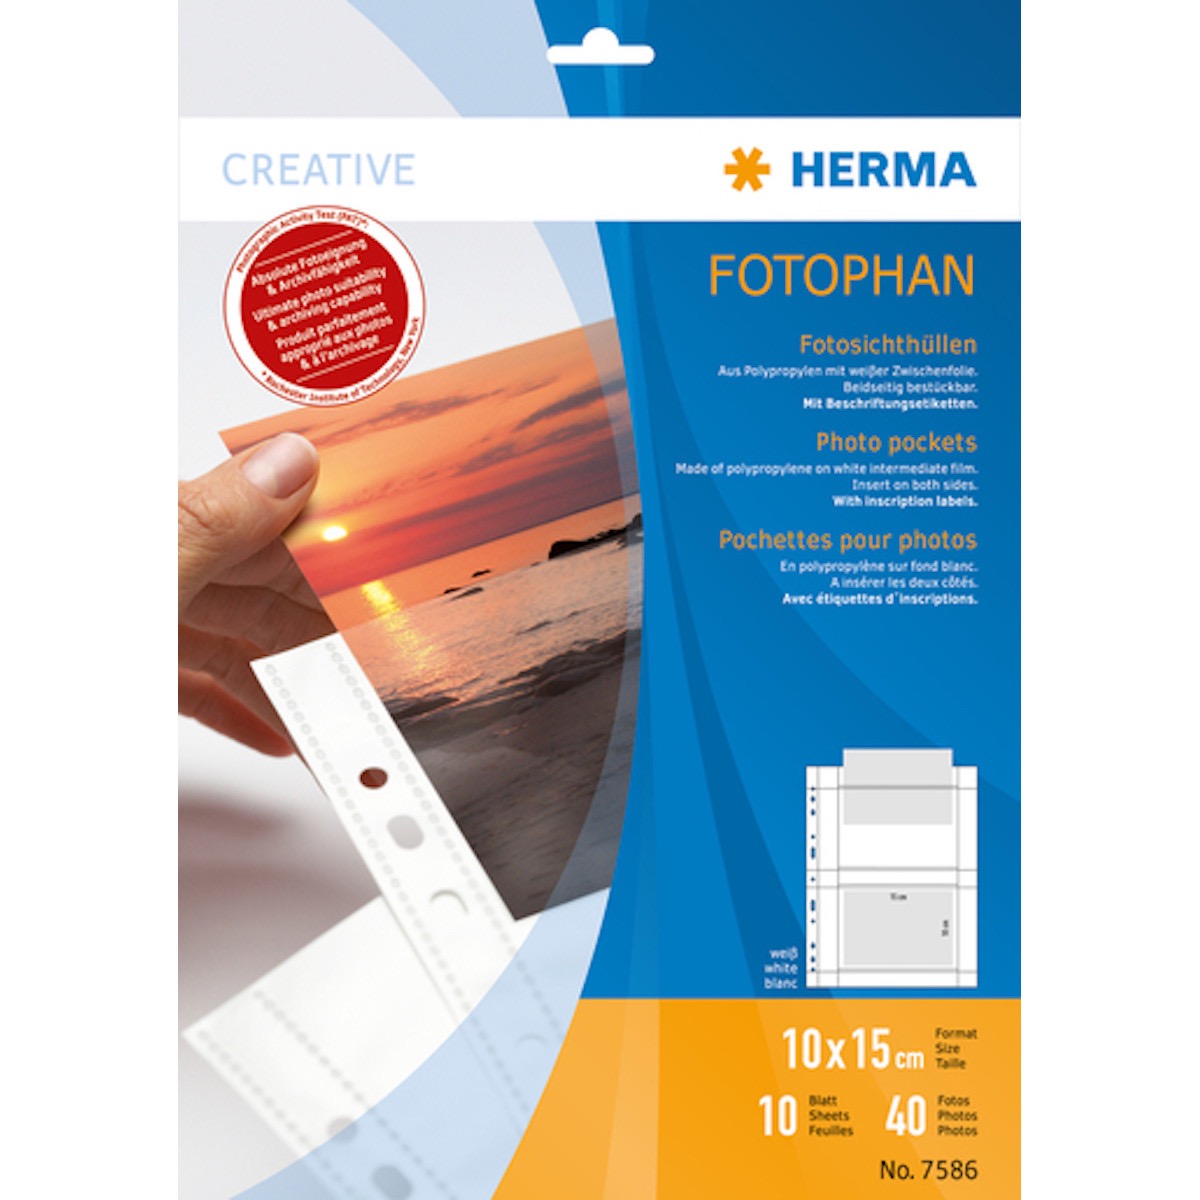 Herma Fotophan 10x15 weiss querformat